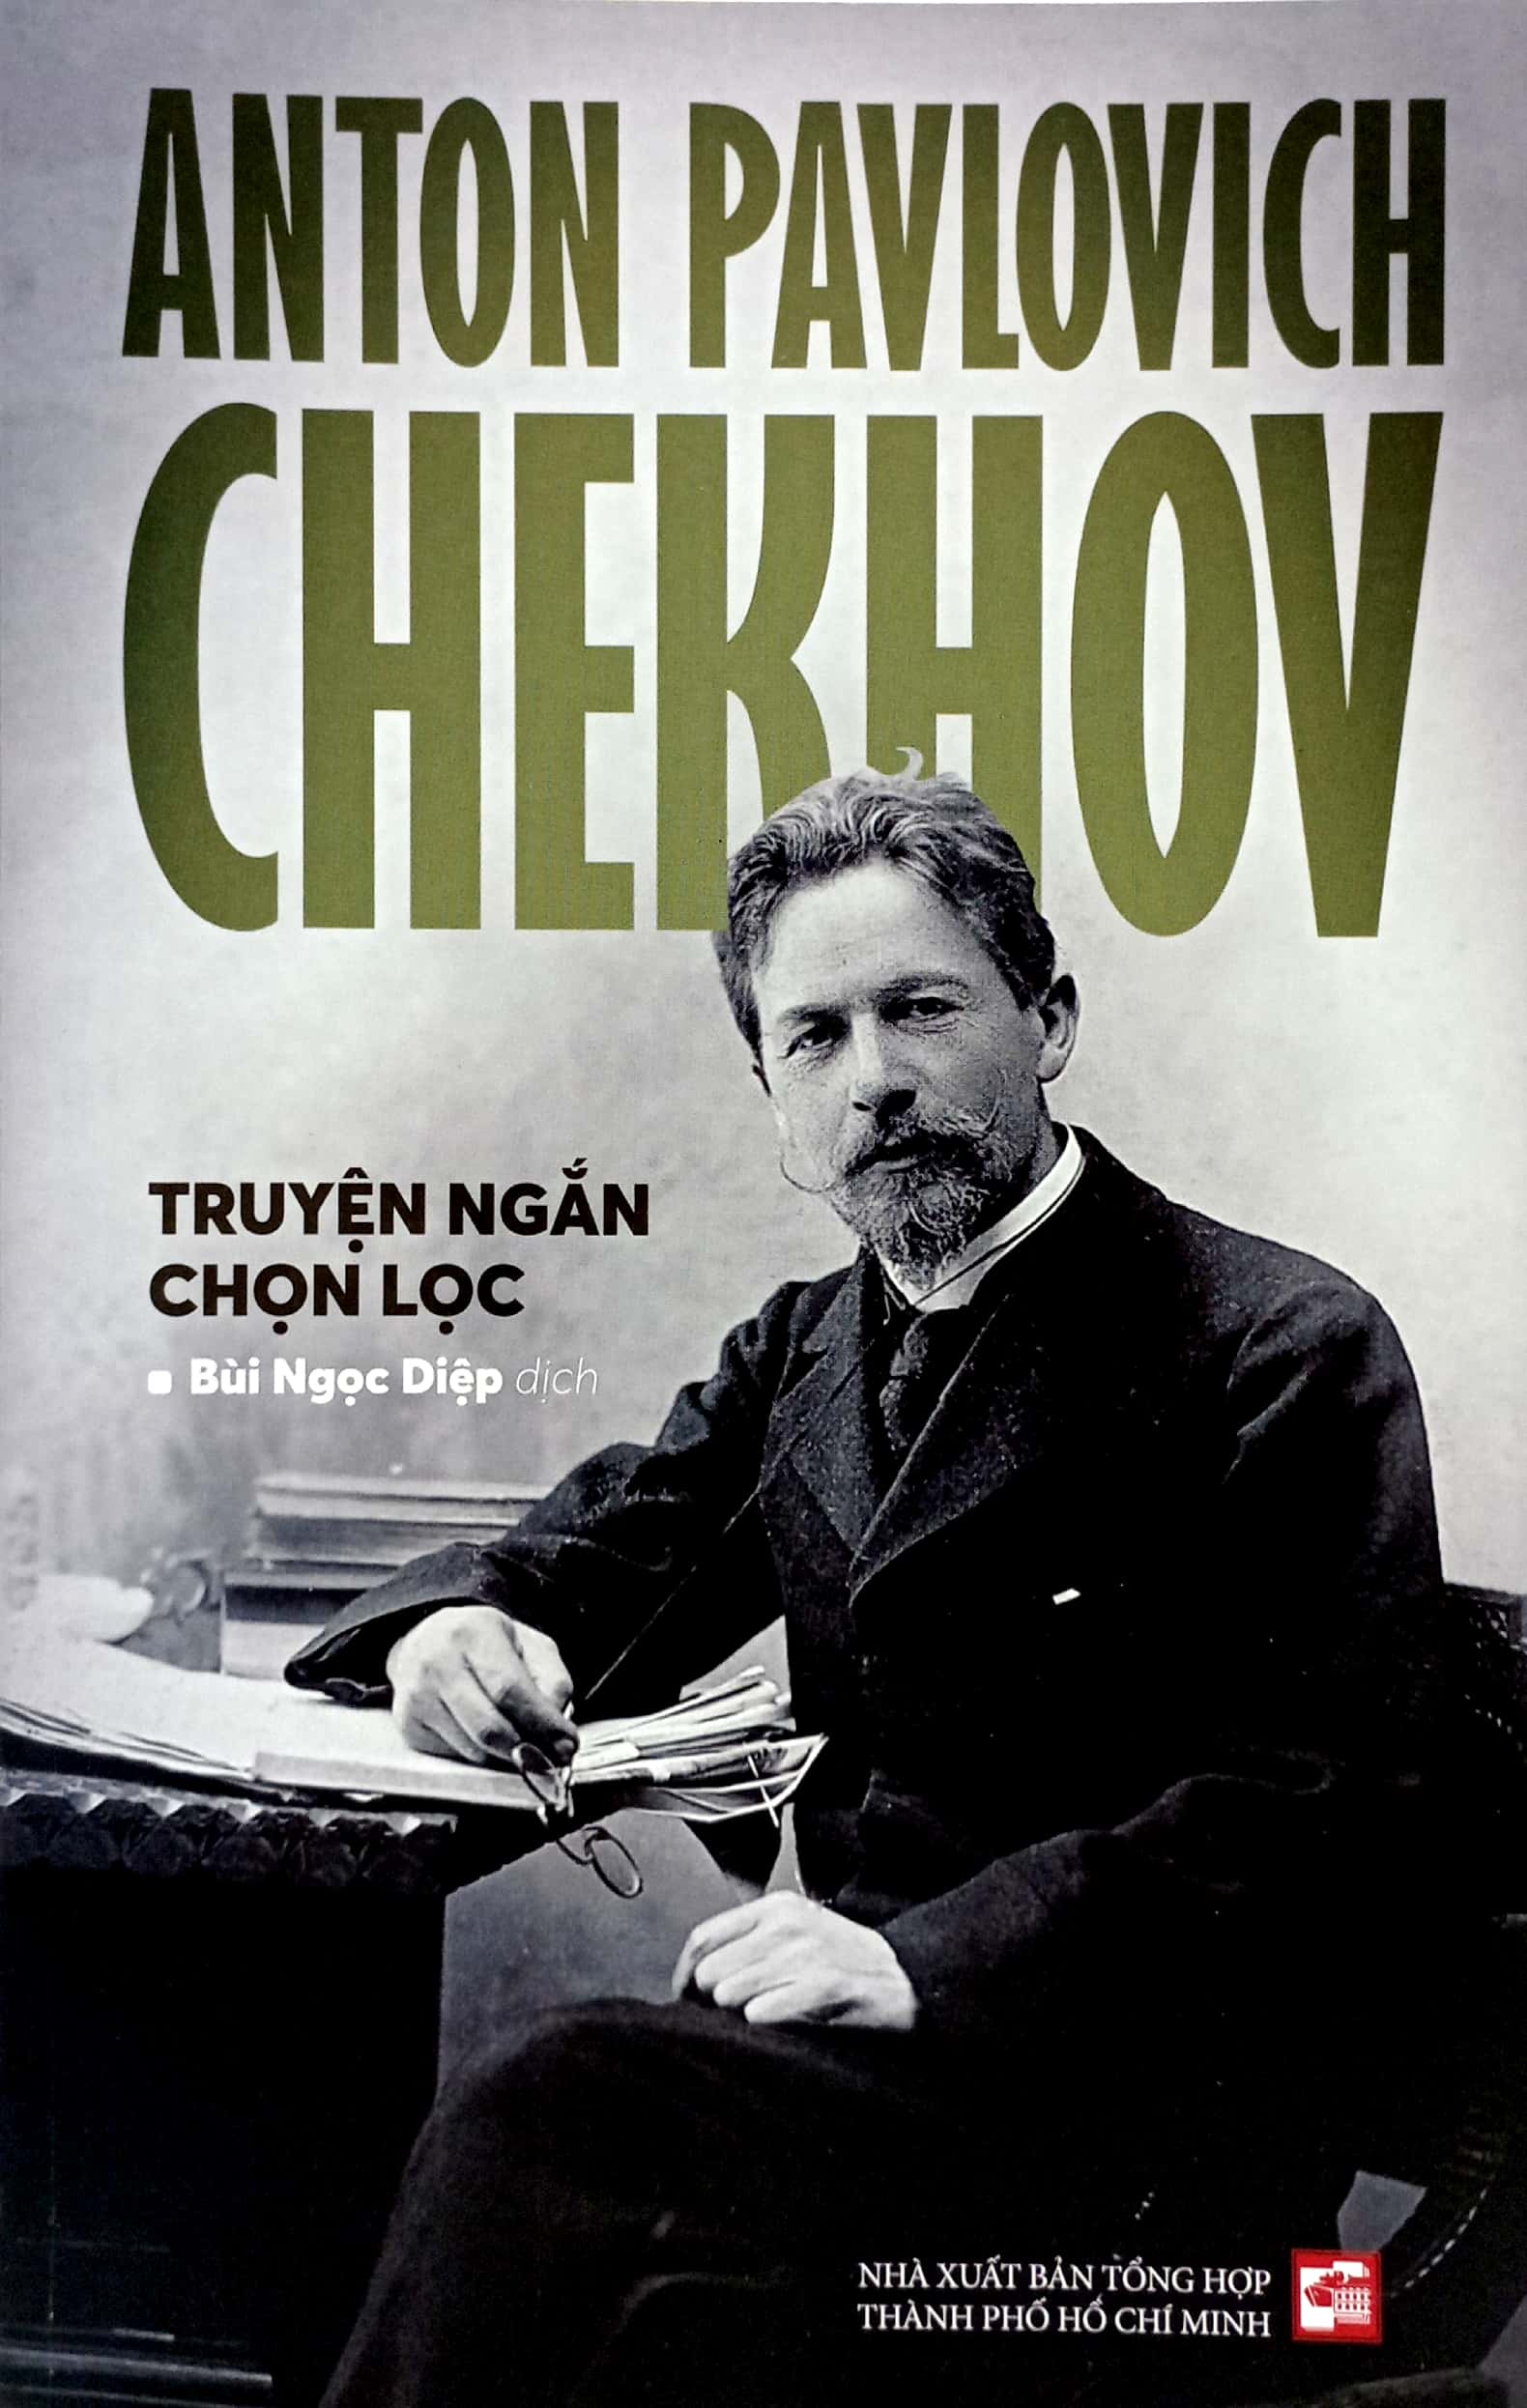 Anton Pavlovich Chekhov - Truyện Ngắn Chọn Lọc PDF